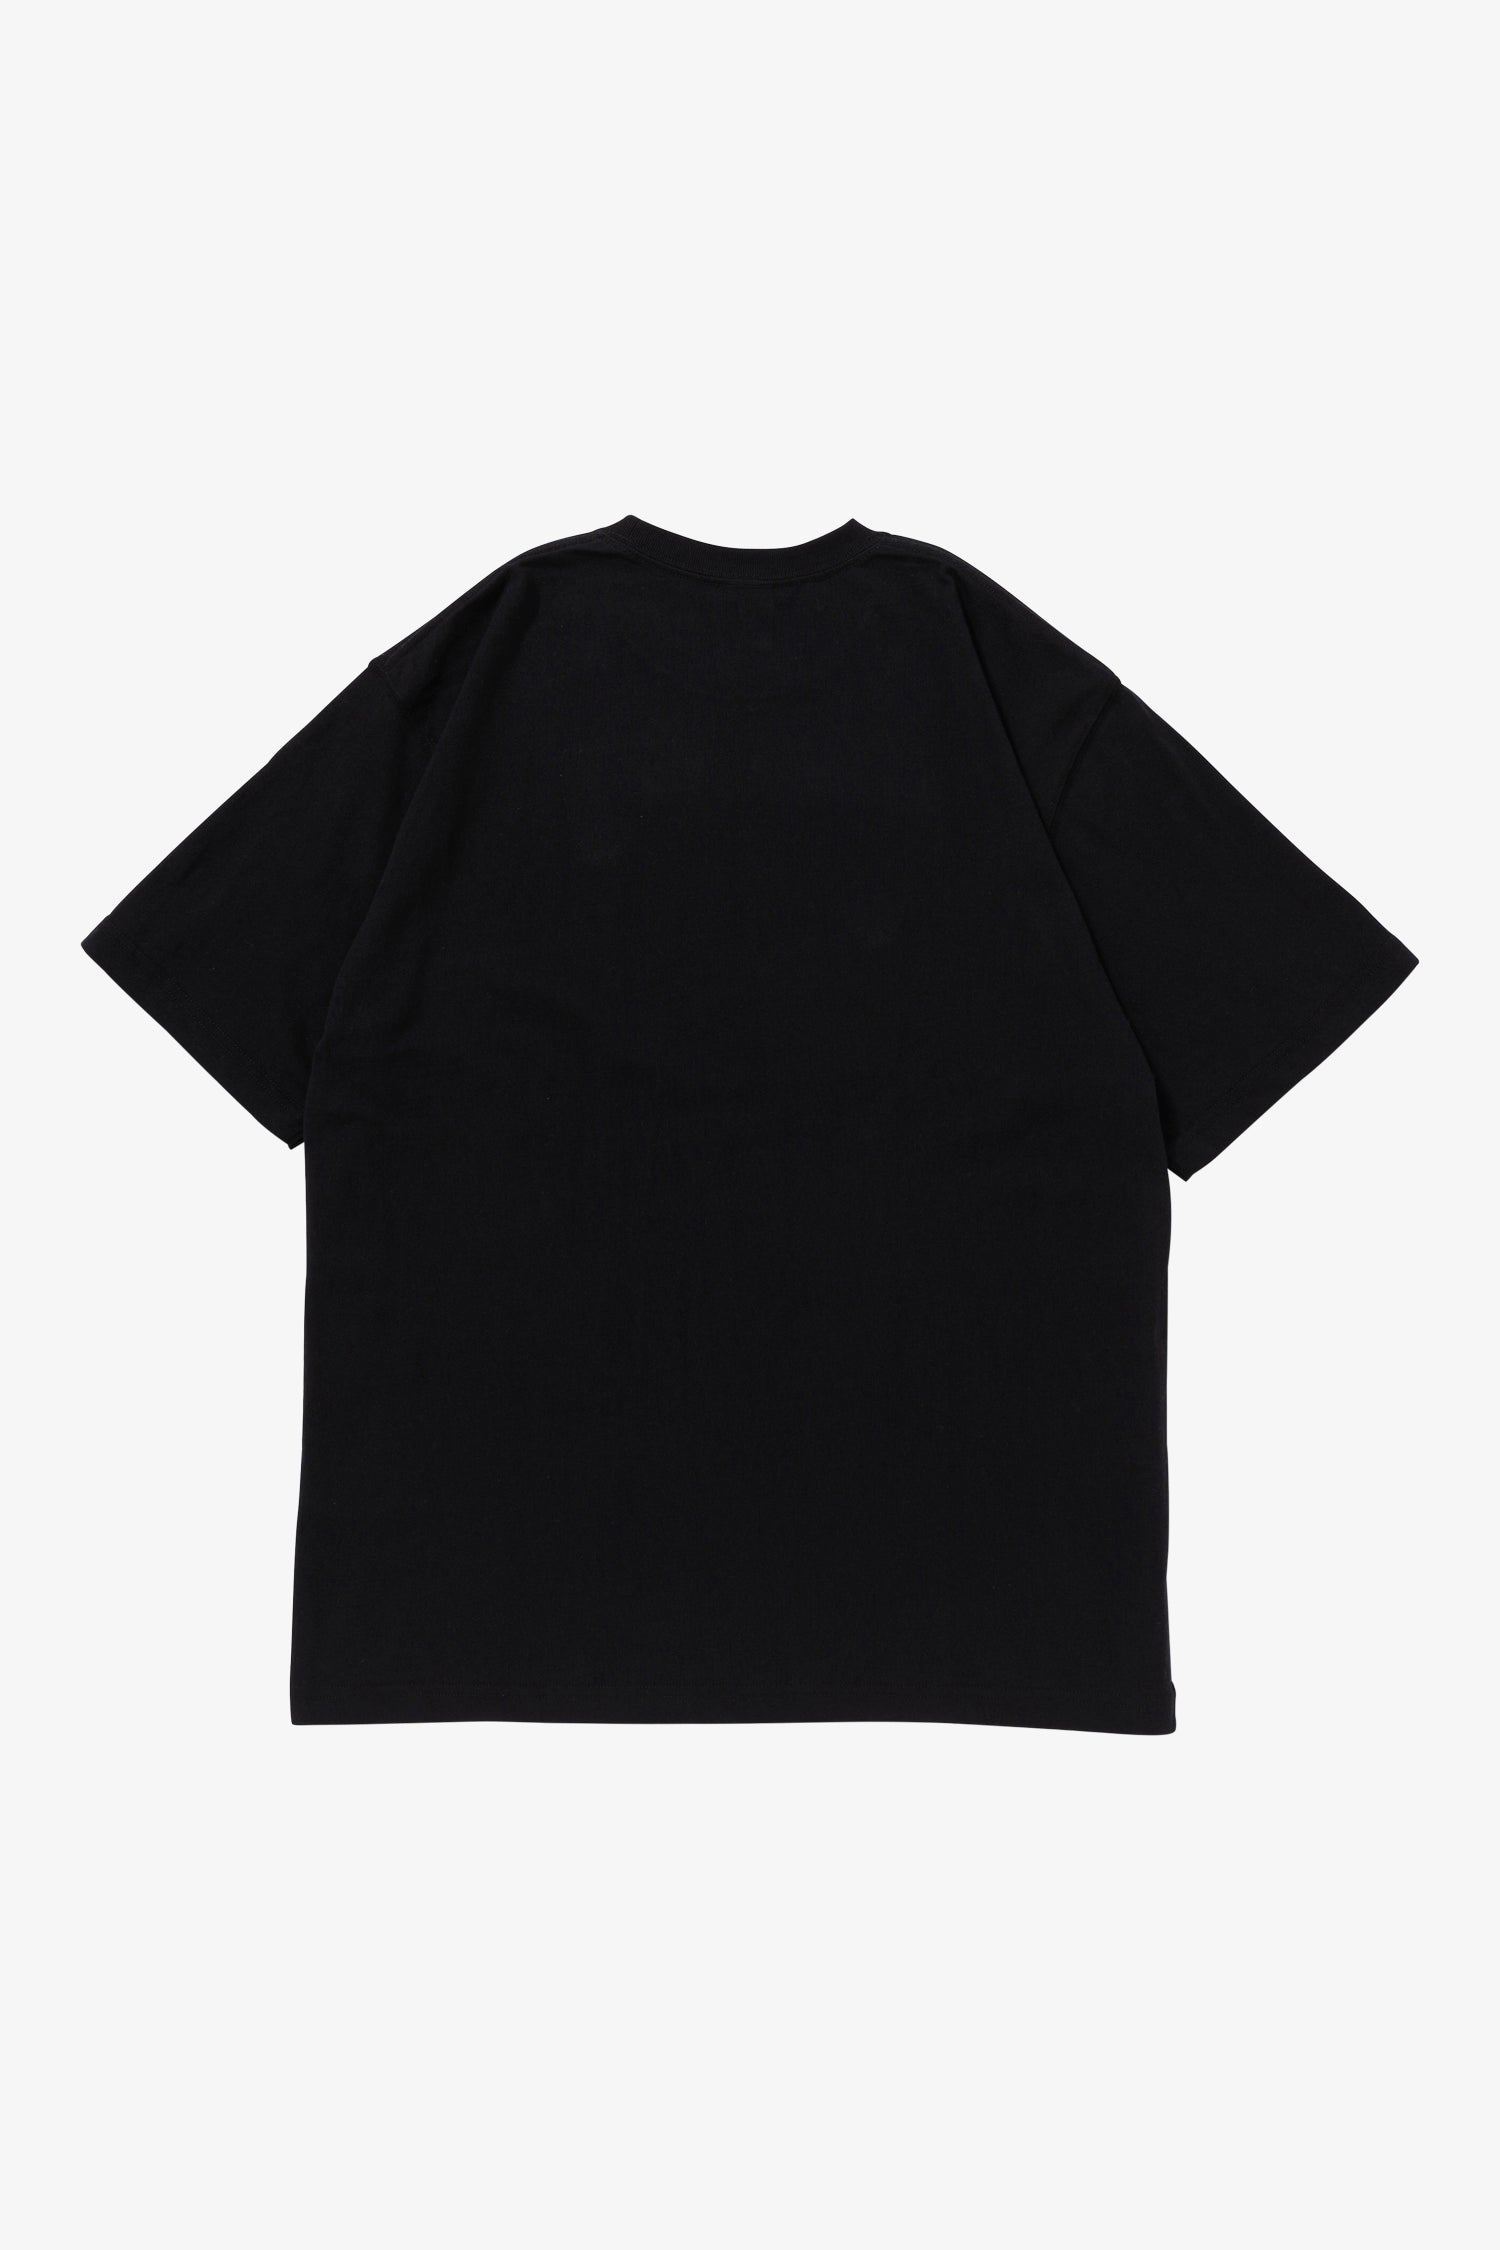 Selectshop FRAME - BLACKEYEPATCH Hot Label Logo Tee T-Shirts Dubai